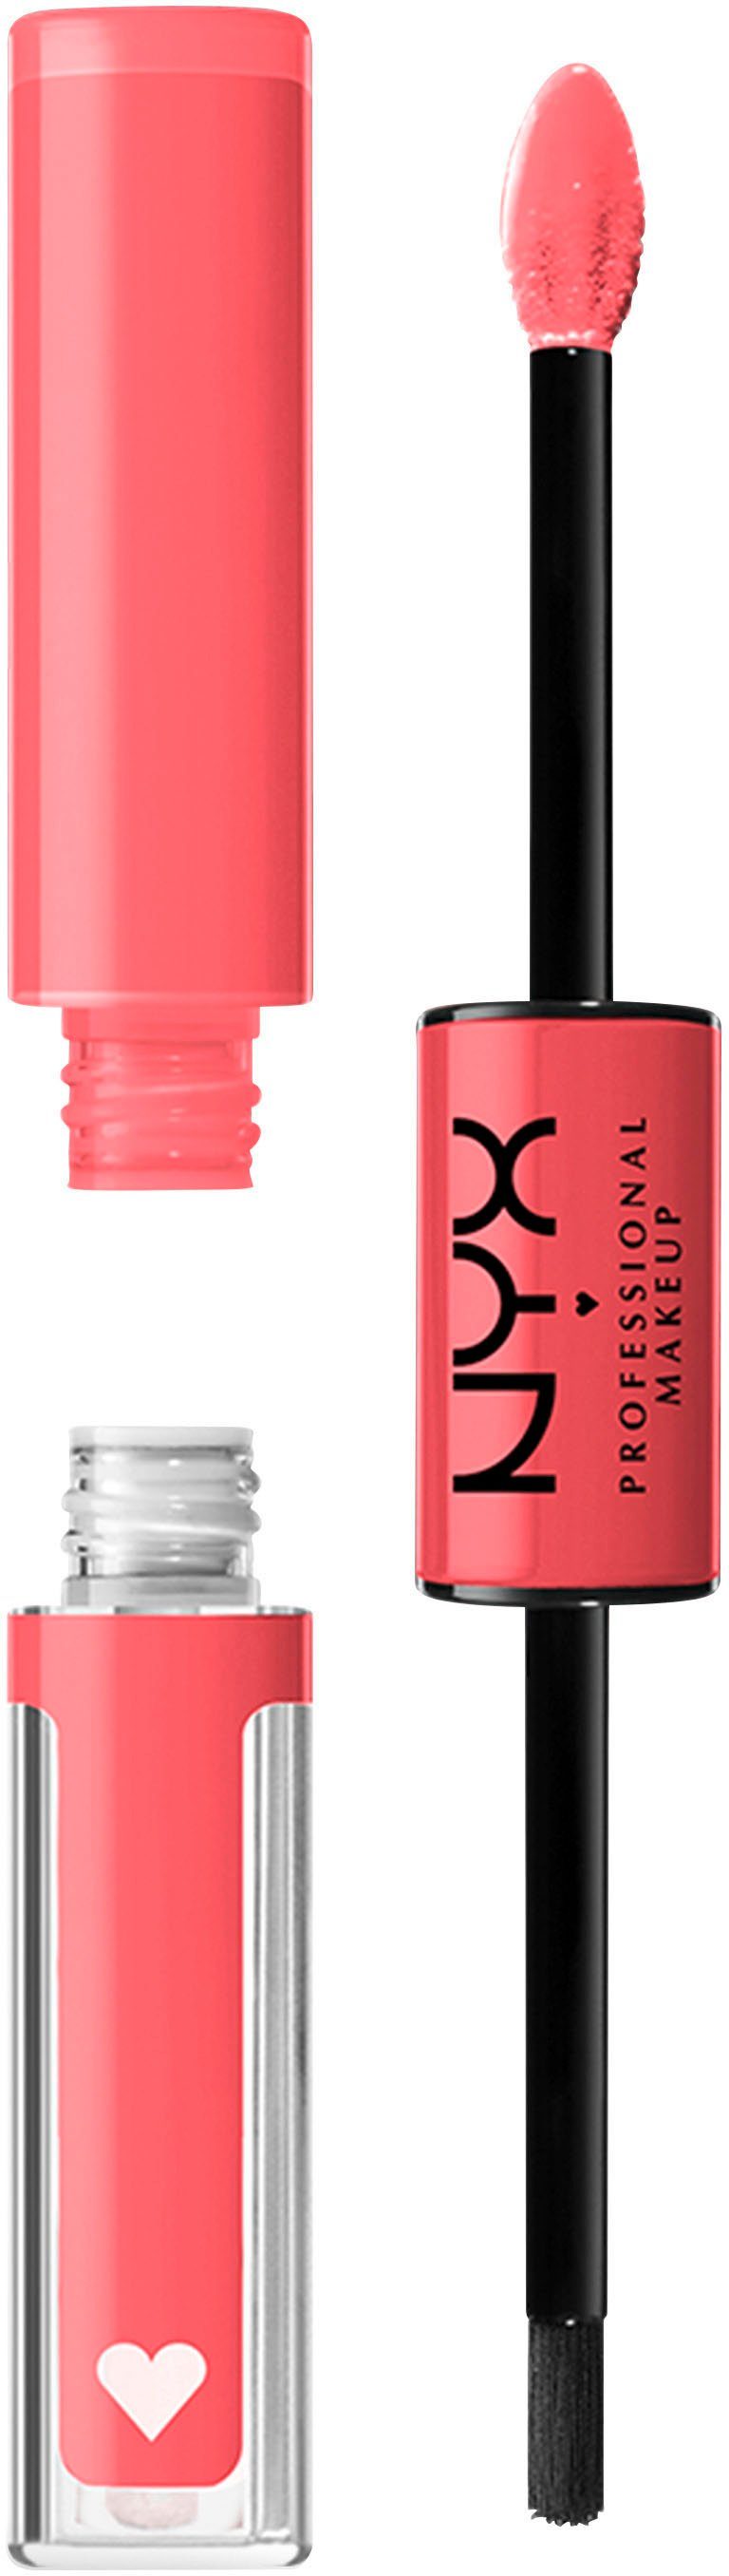 NYX Lippenstift Professional Makeup Hustle to SHLP01 High mit Shine, präziser geformtem Born Loud Applikator Pigment Shine Auftrag Lip